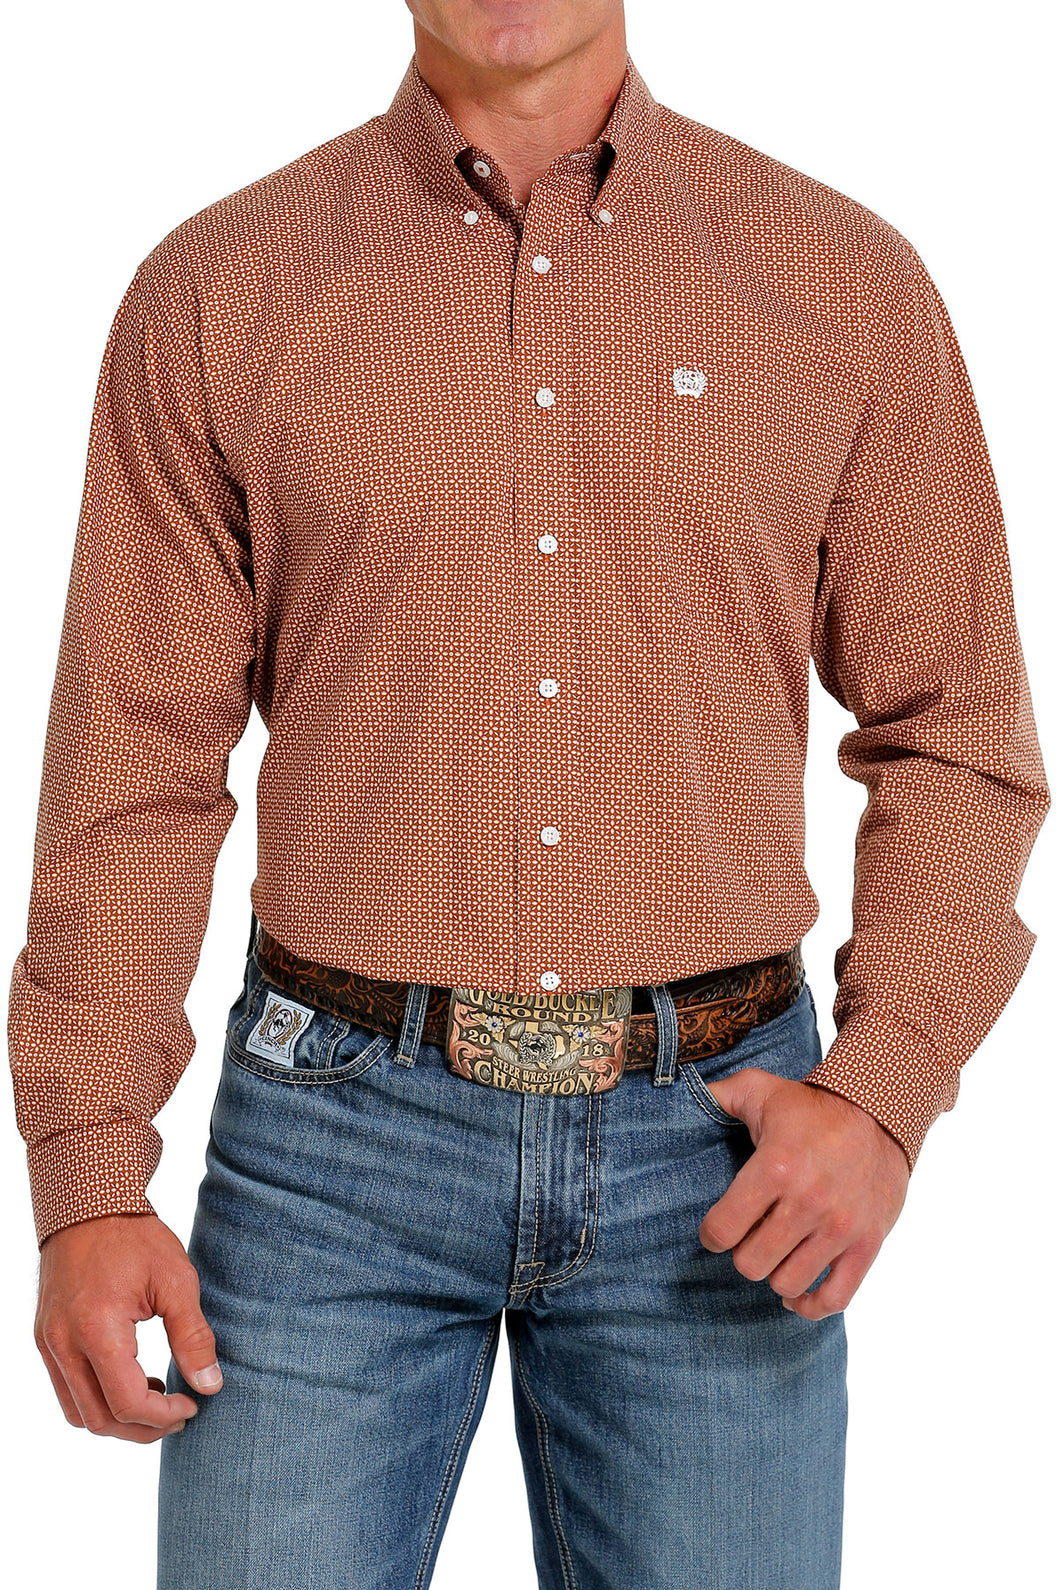 Pard's Western Shop Cinch Men's Brown/Cream Geometric Print Button-Down Shirt